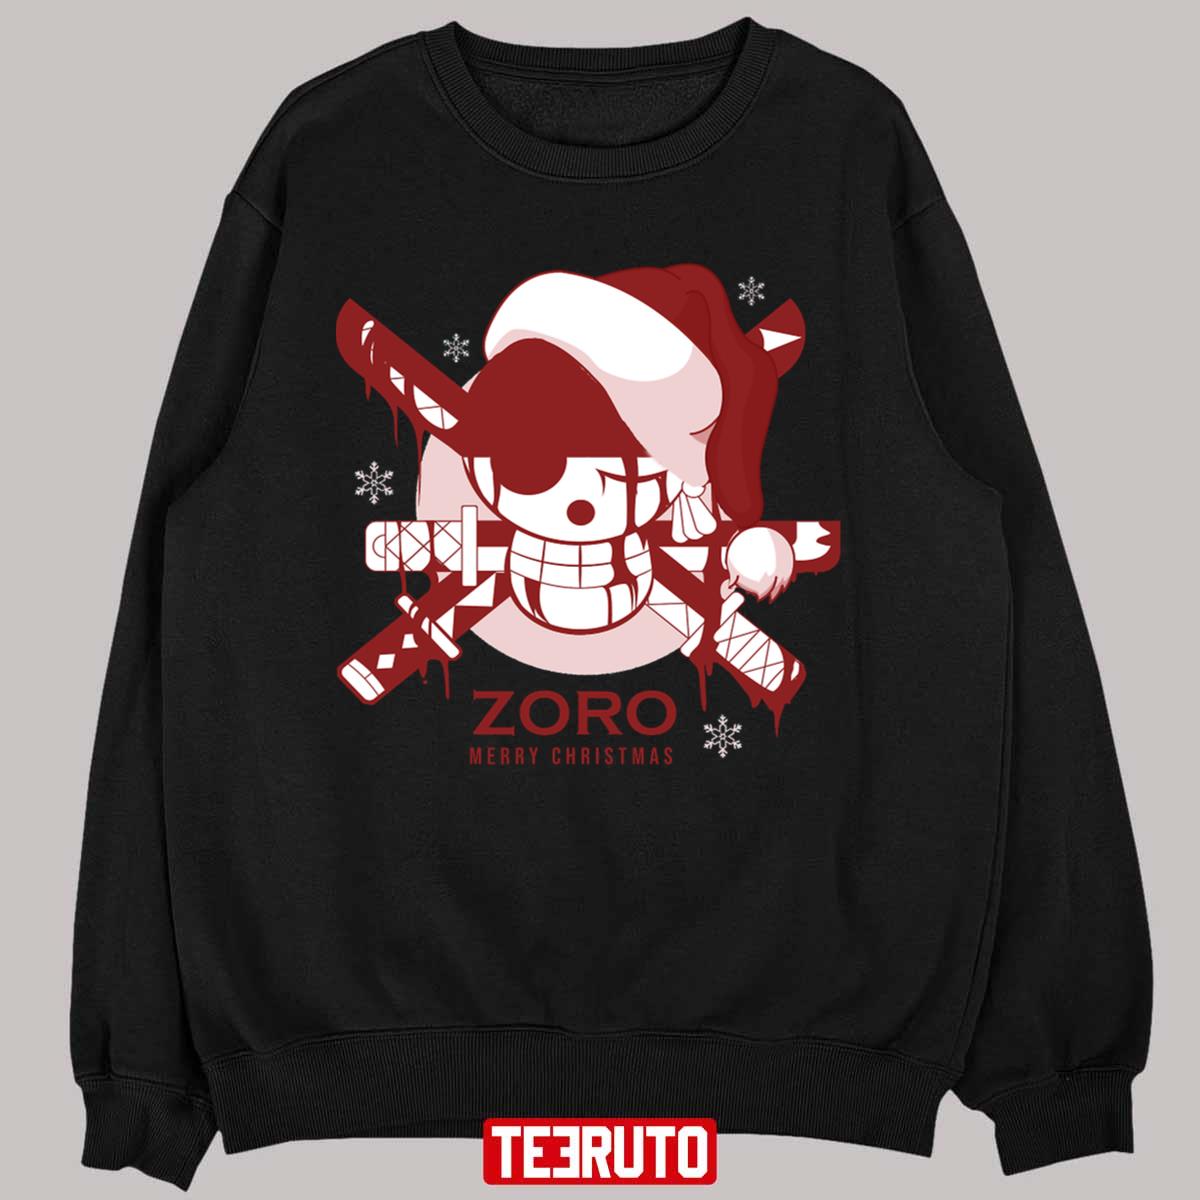 Zoro Merry Christmas One Piece Christmas Unisex T-Shirt